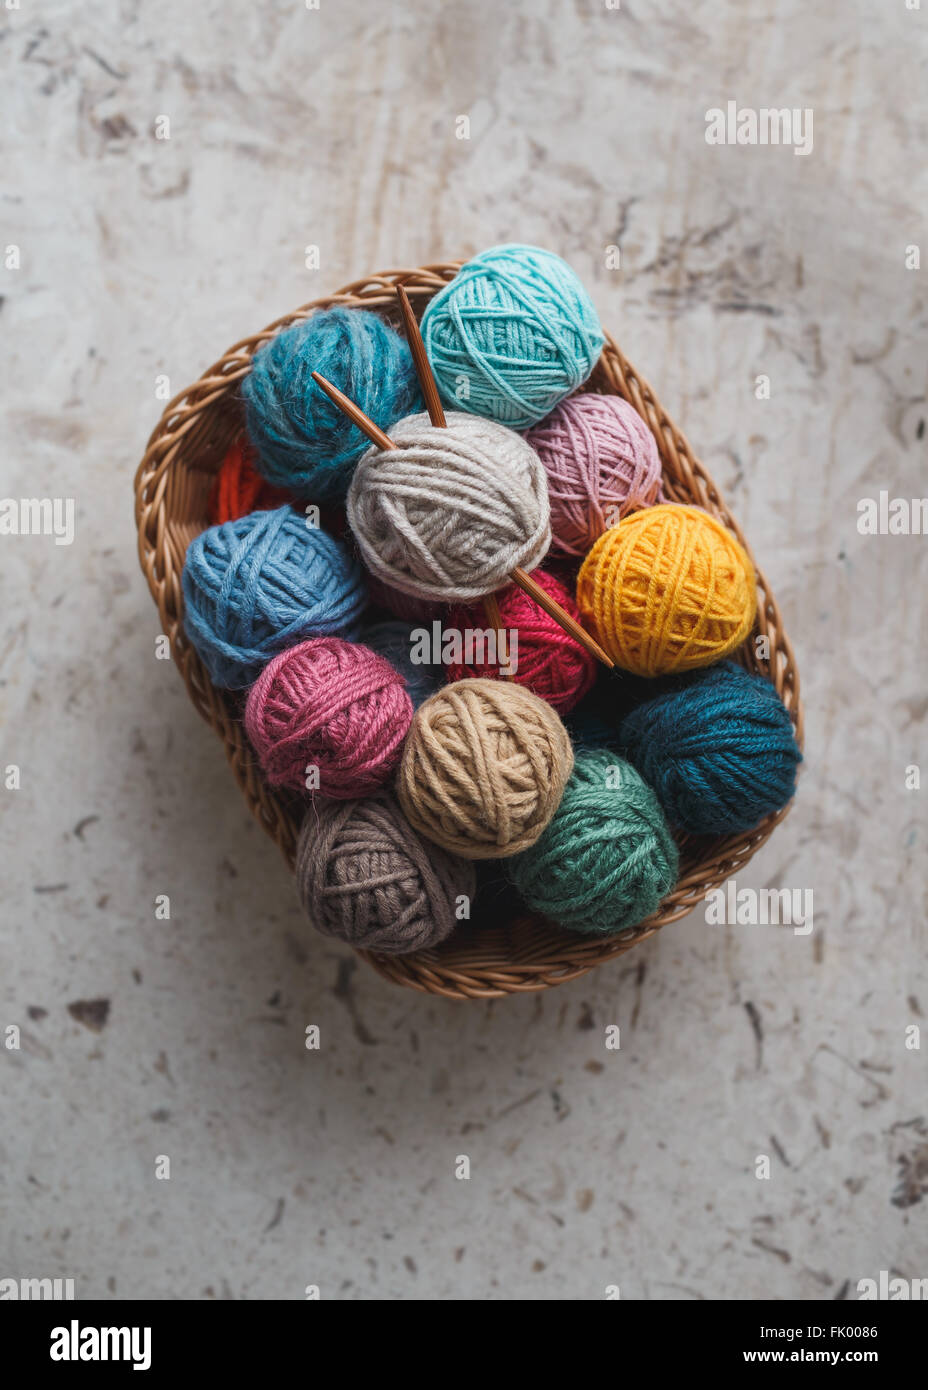 Yarn Balls Balls Colored Yarn Wicker Dish Yarn Knitting Beige Stock Photo  by ©nazarov.dnepr@gmail.com 576268278